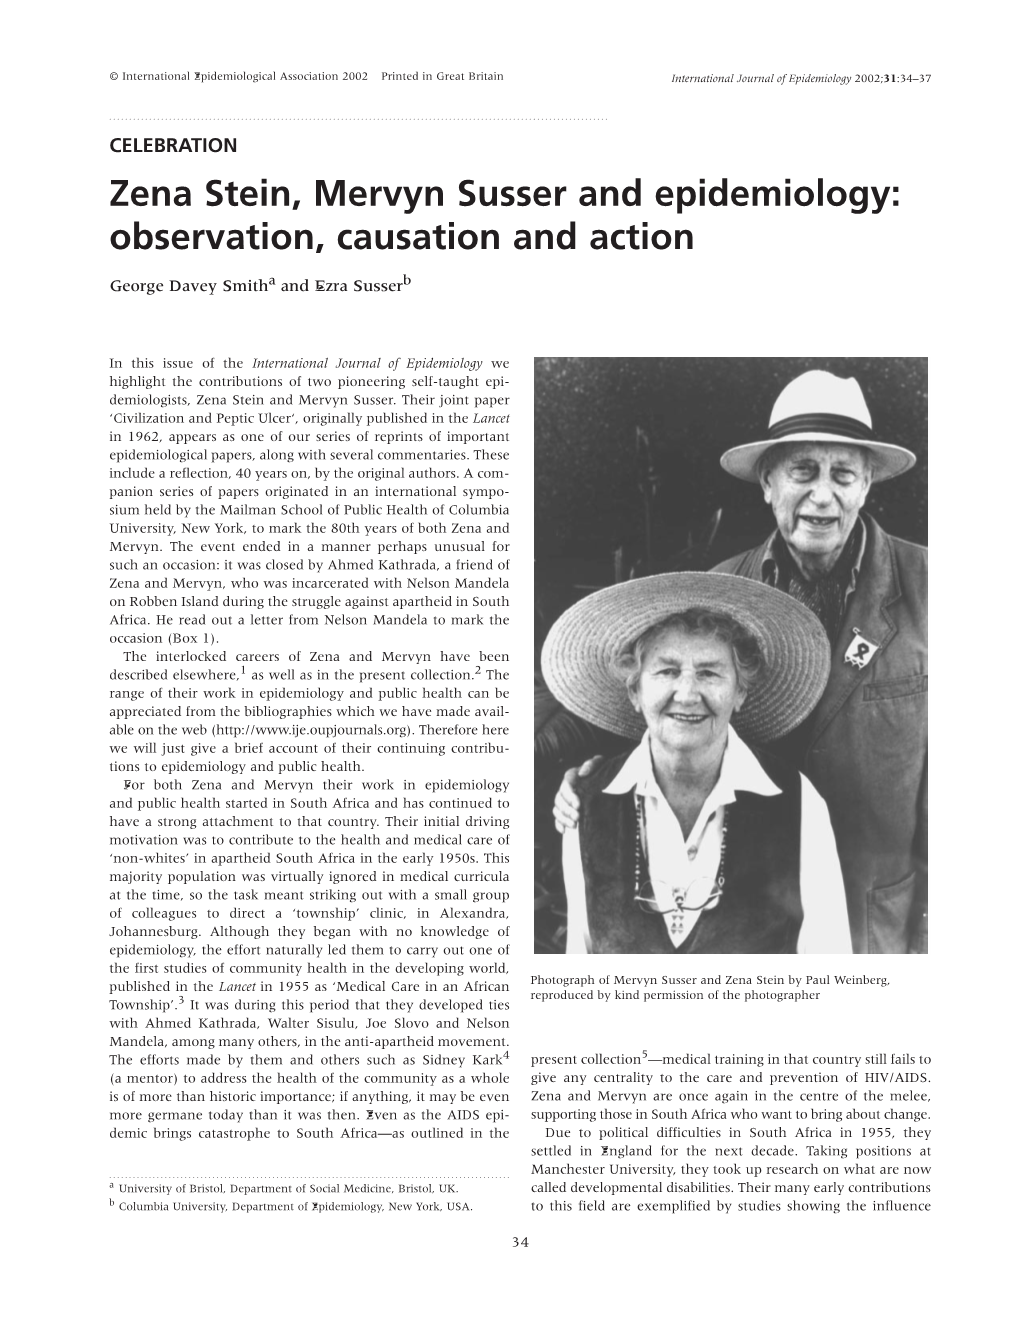 Zena Stein, Mervyn Susser and Epidemiology: Observation, Causation and Action